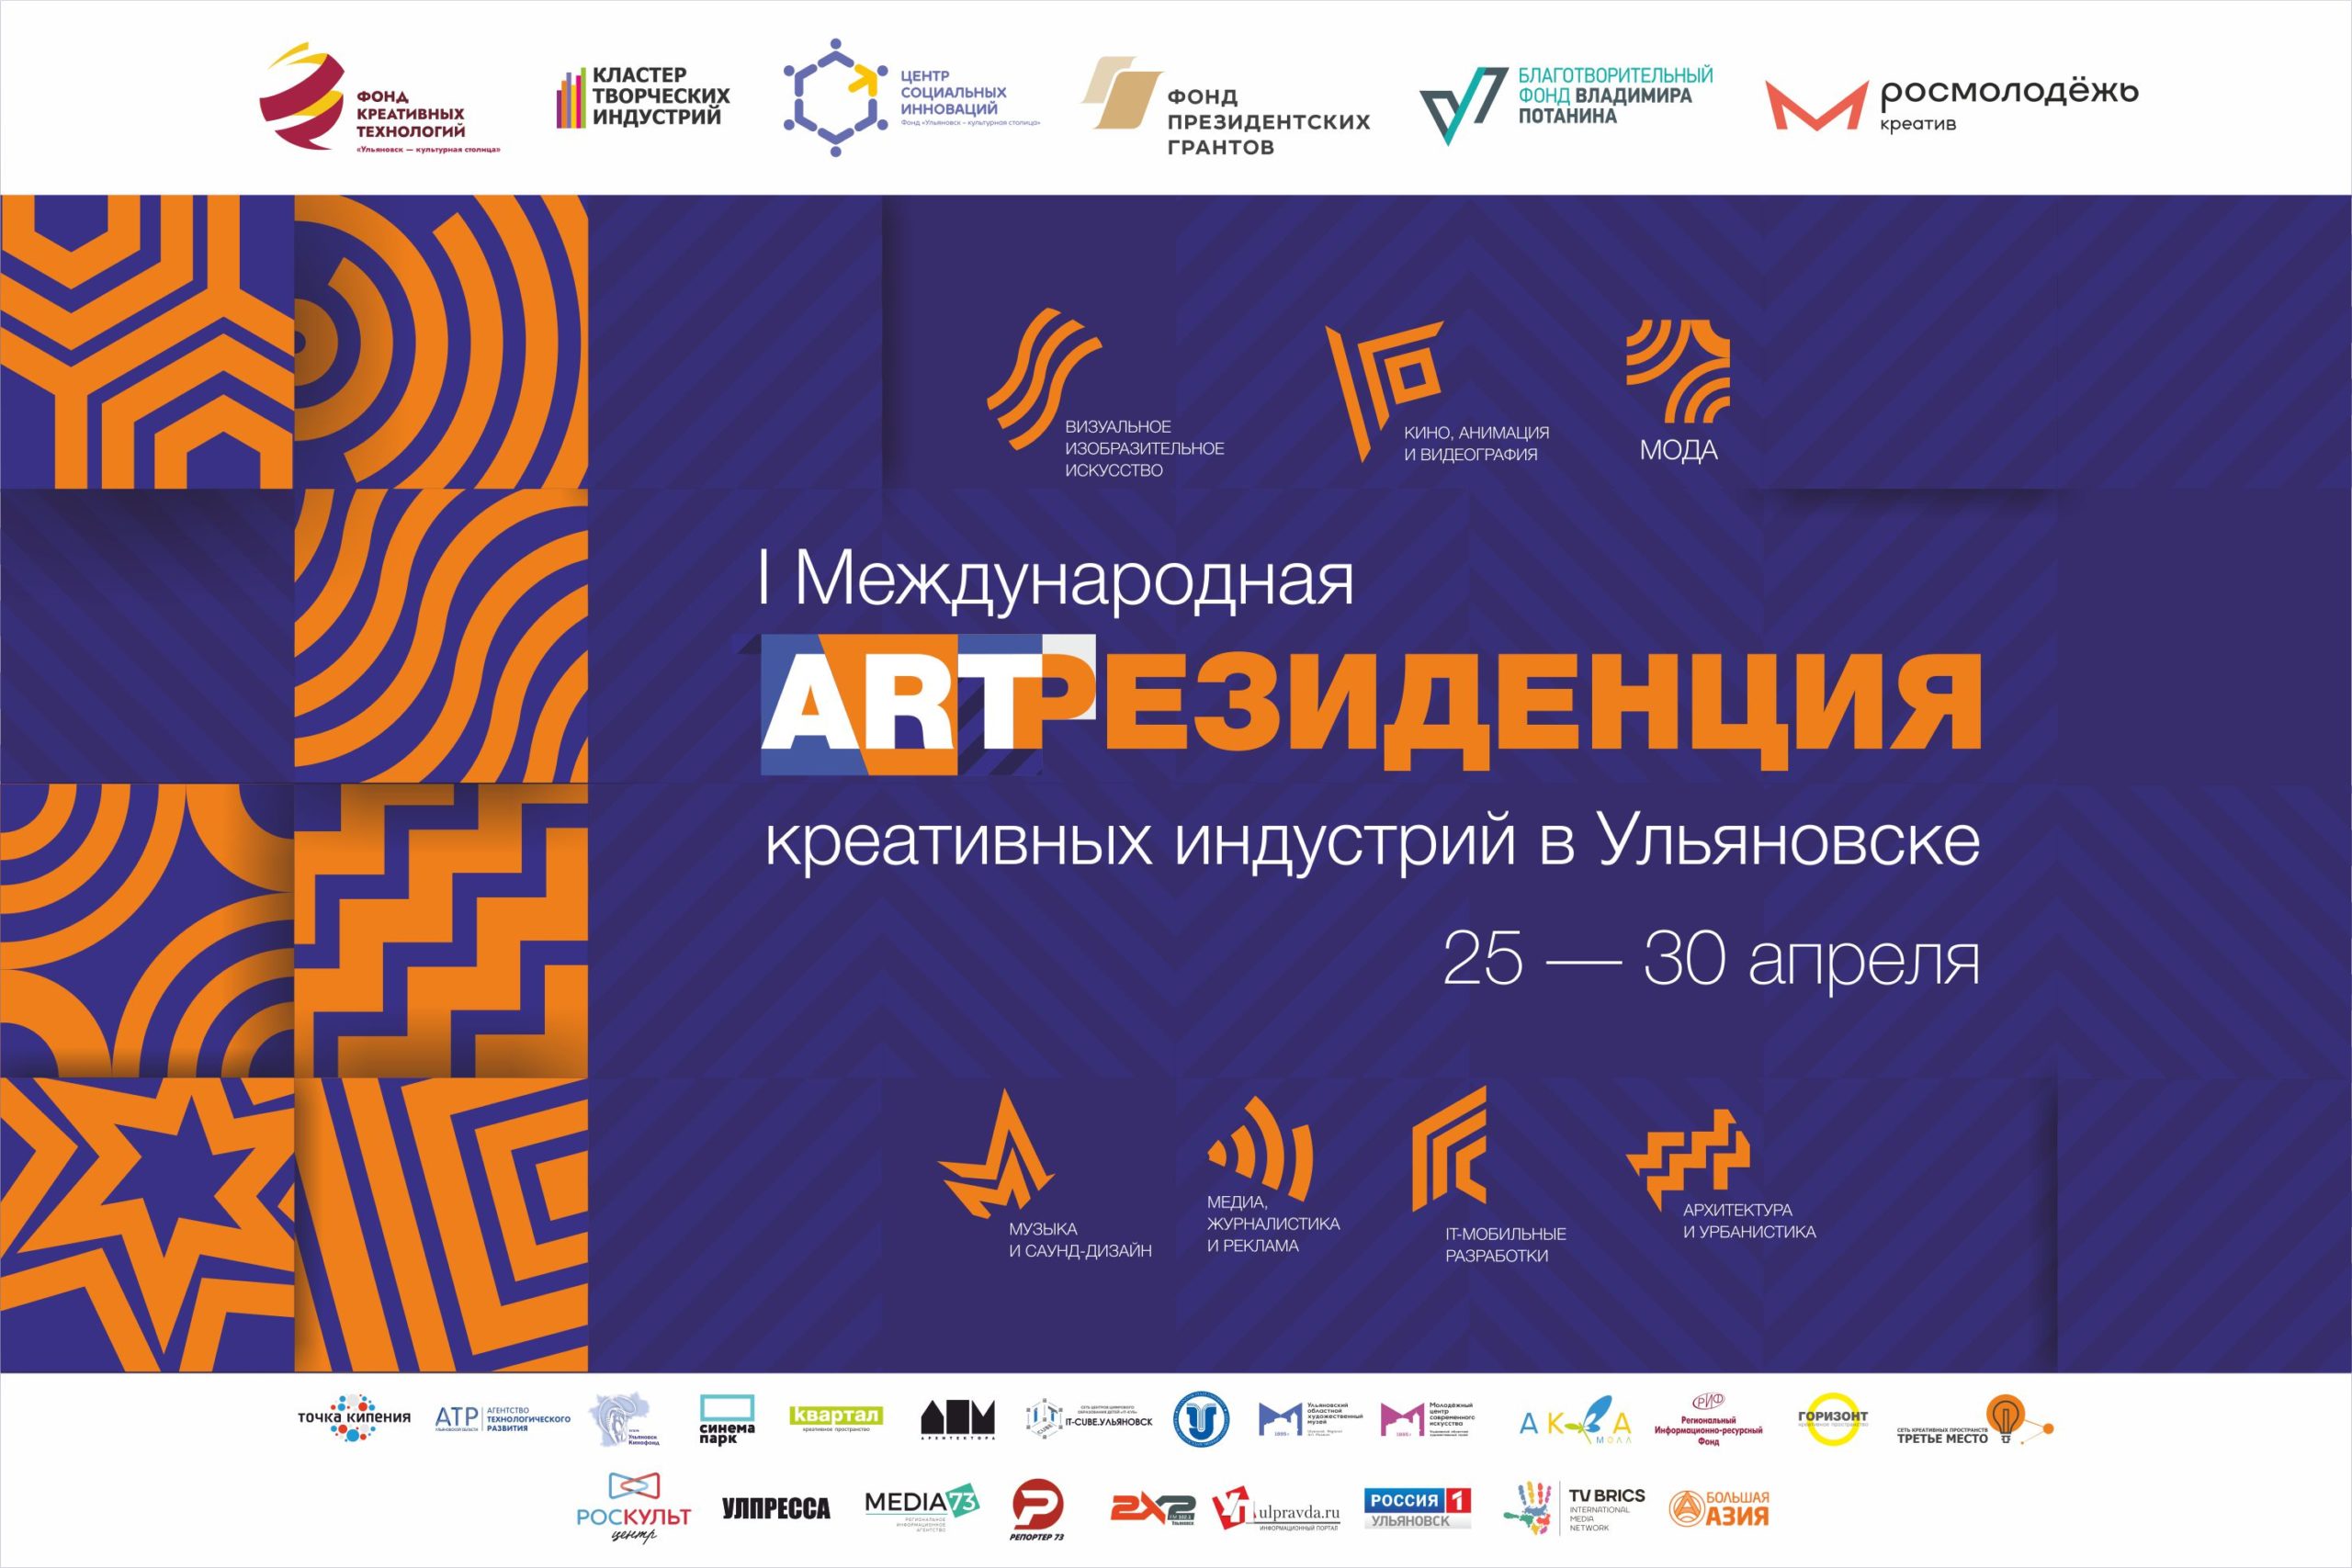  I Международная Арт-резиденция креативных индустрий в Ульяновске